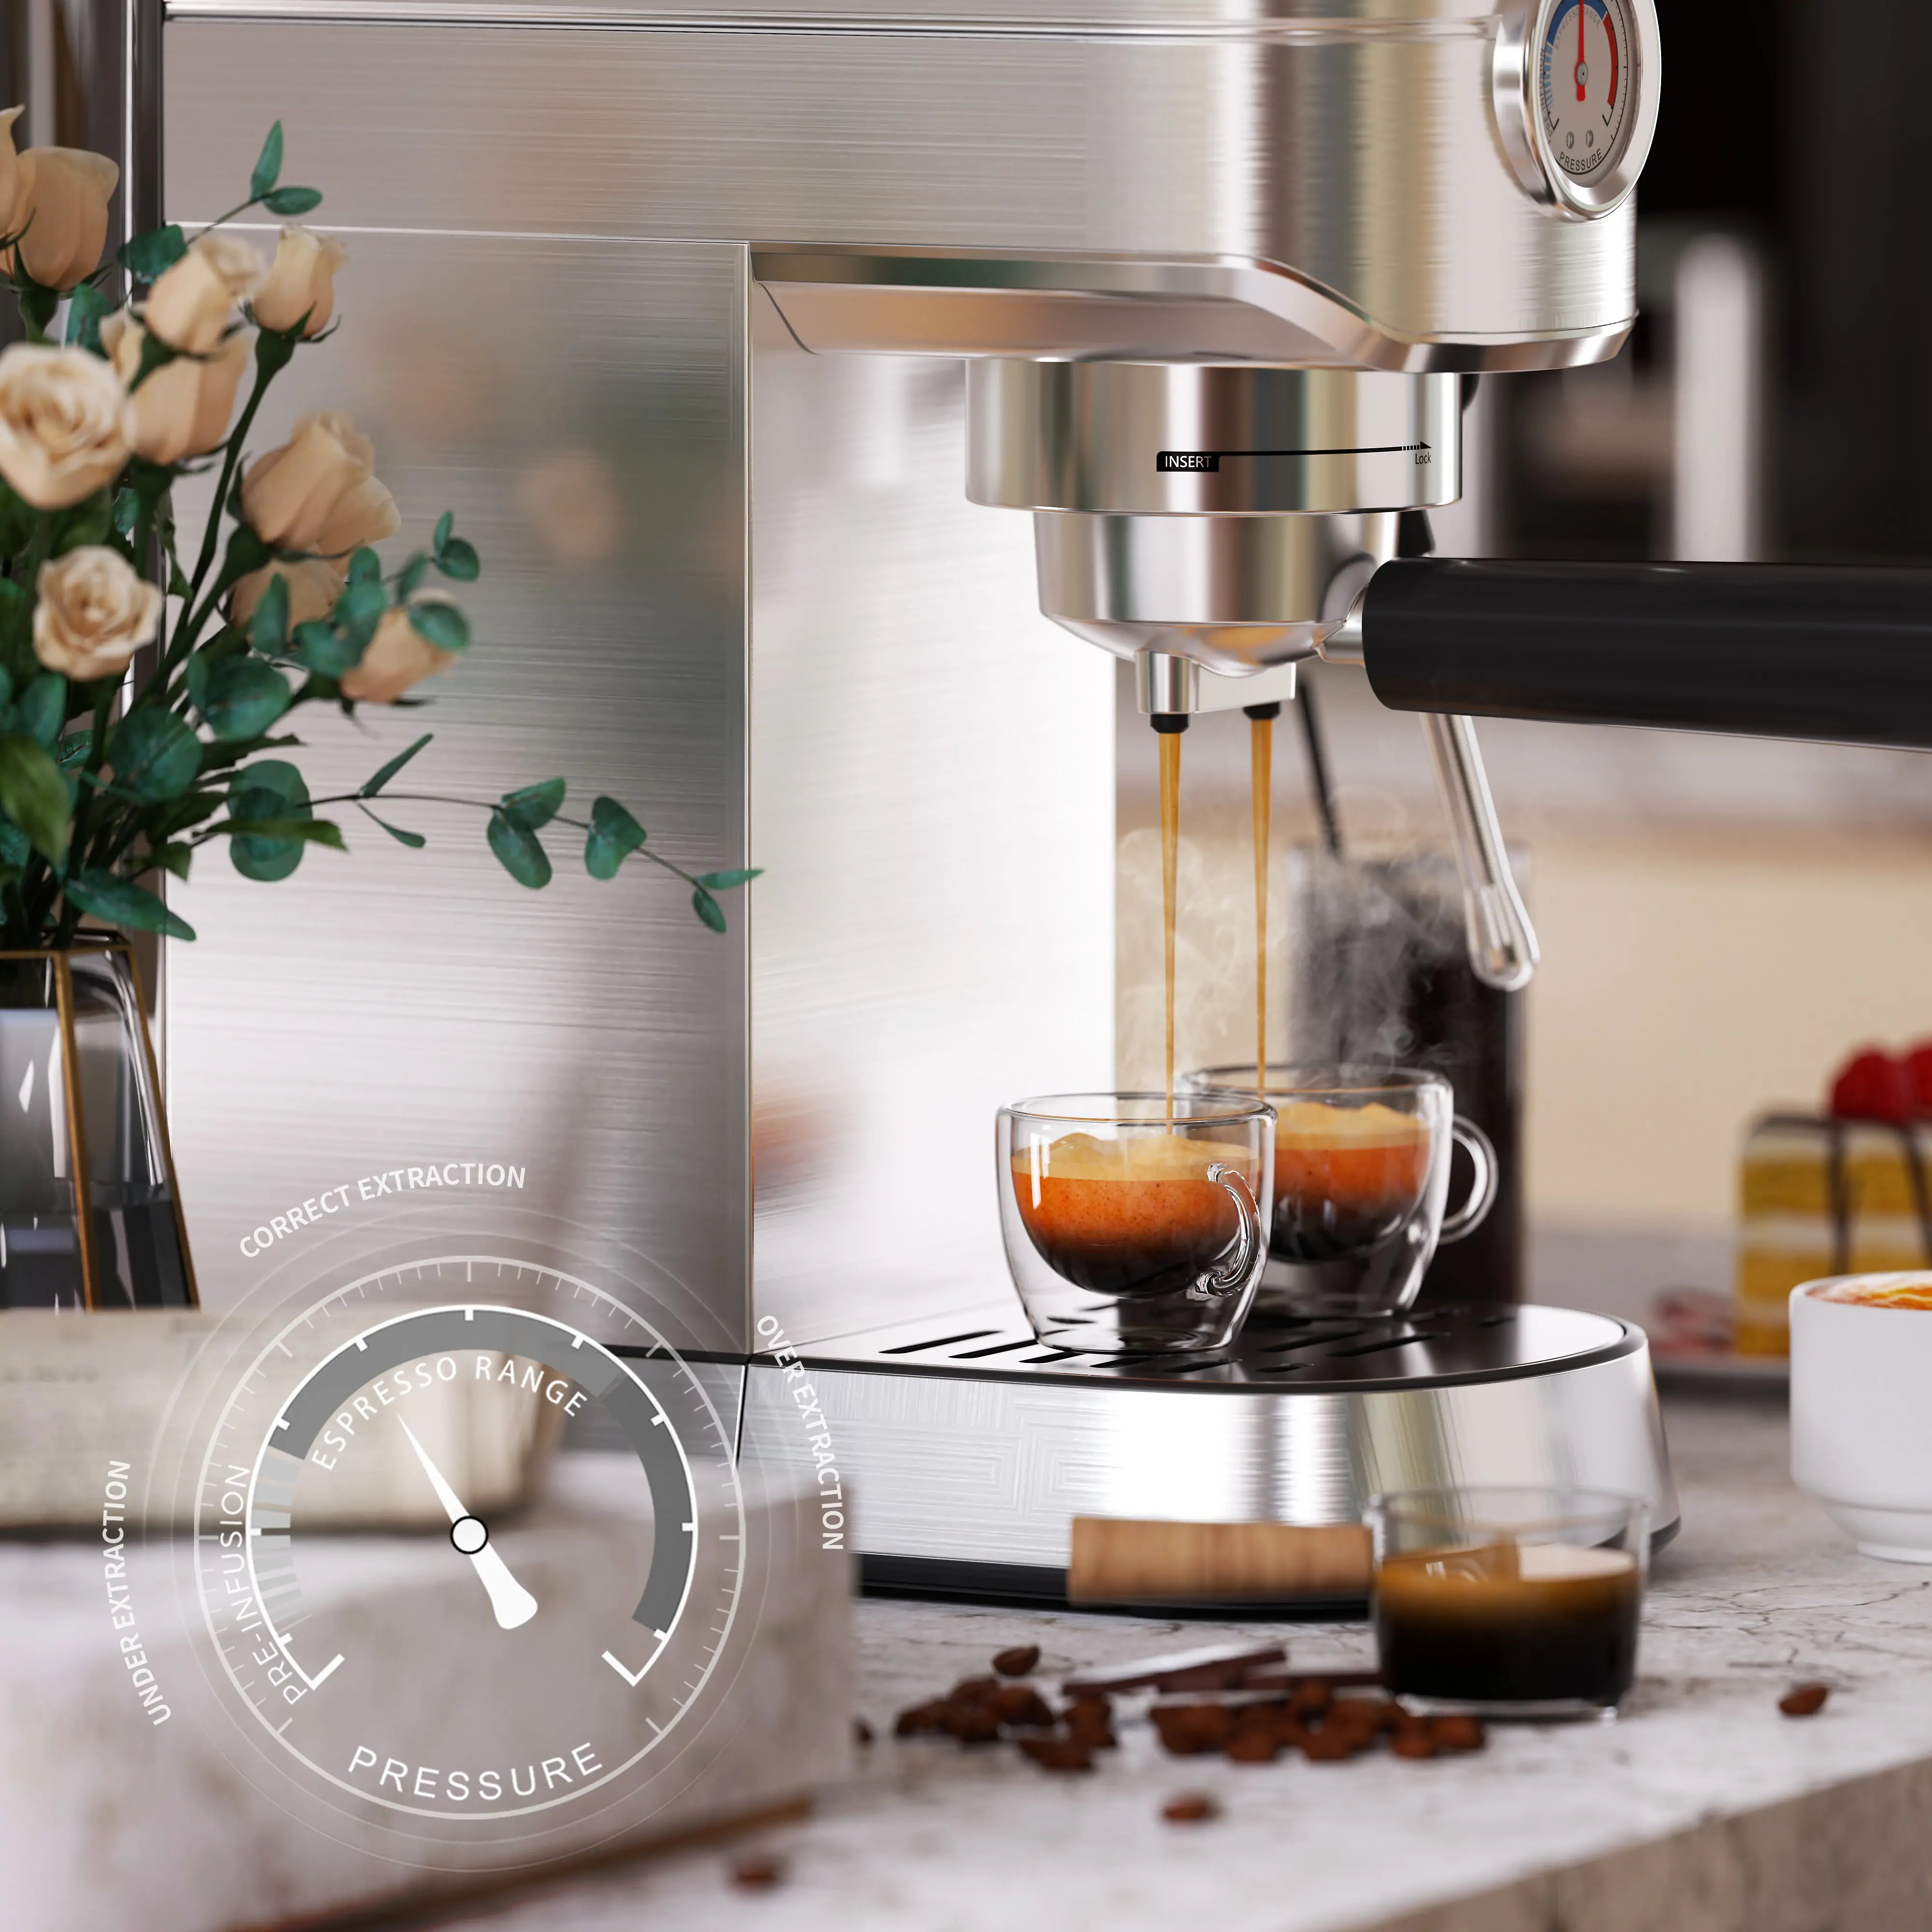 Gevi 3-in-1 Smart Espresso Coffee Machine – GEVI